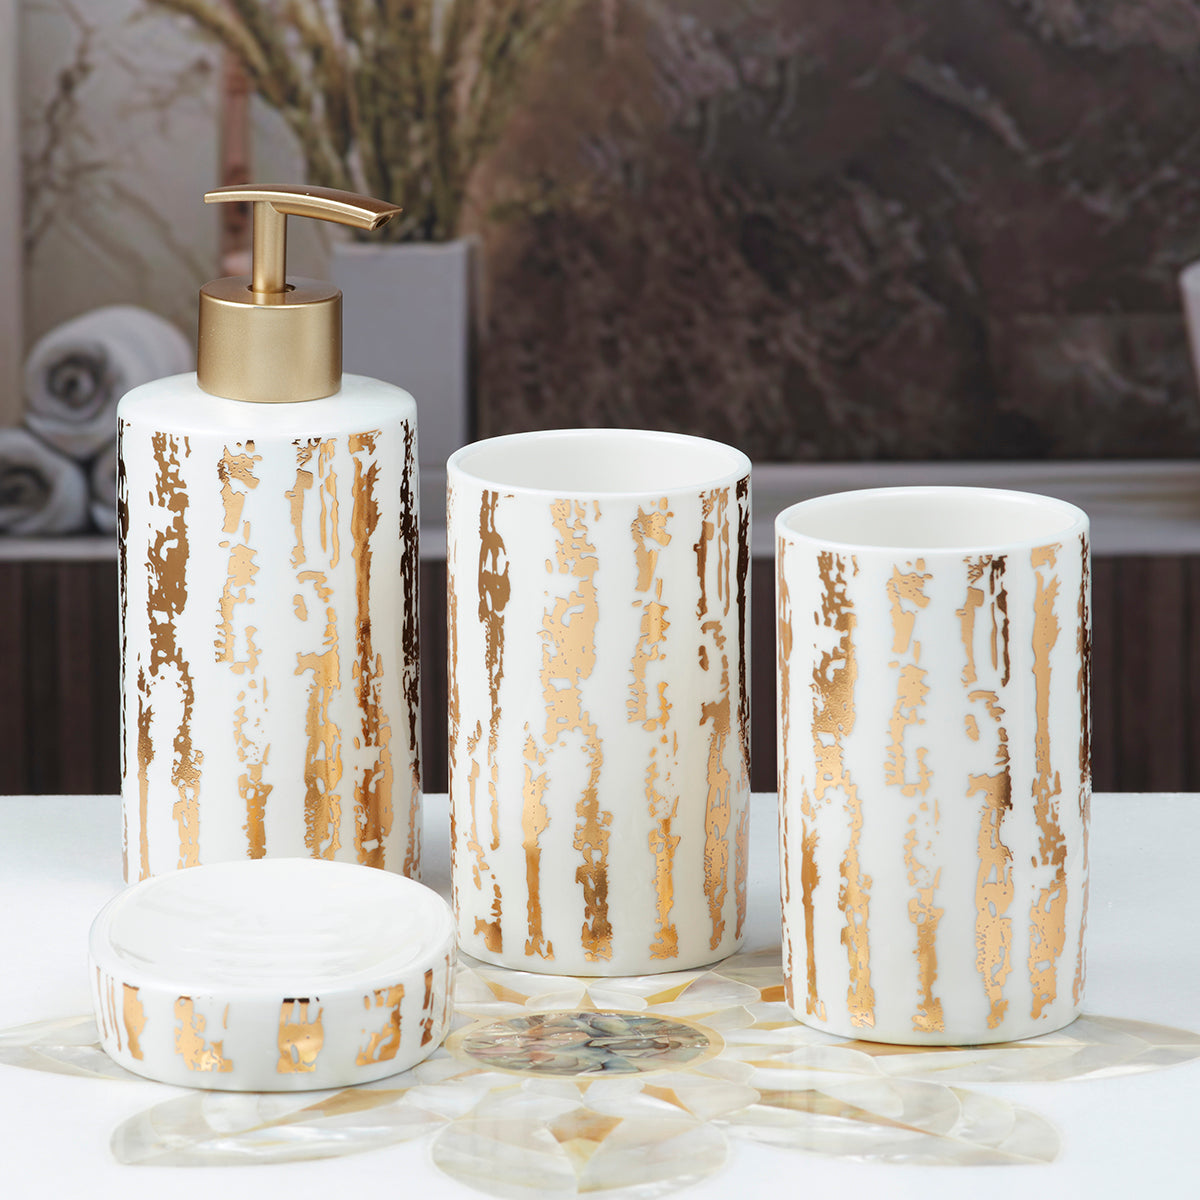 Ceramic Bathroom Accessories Set of 4 Bath Set with Soap Dispenser (9594)